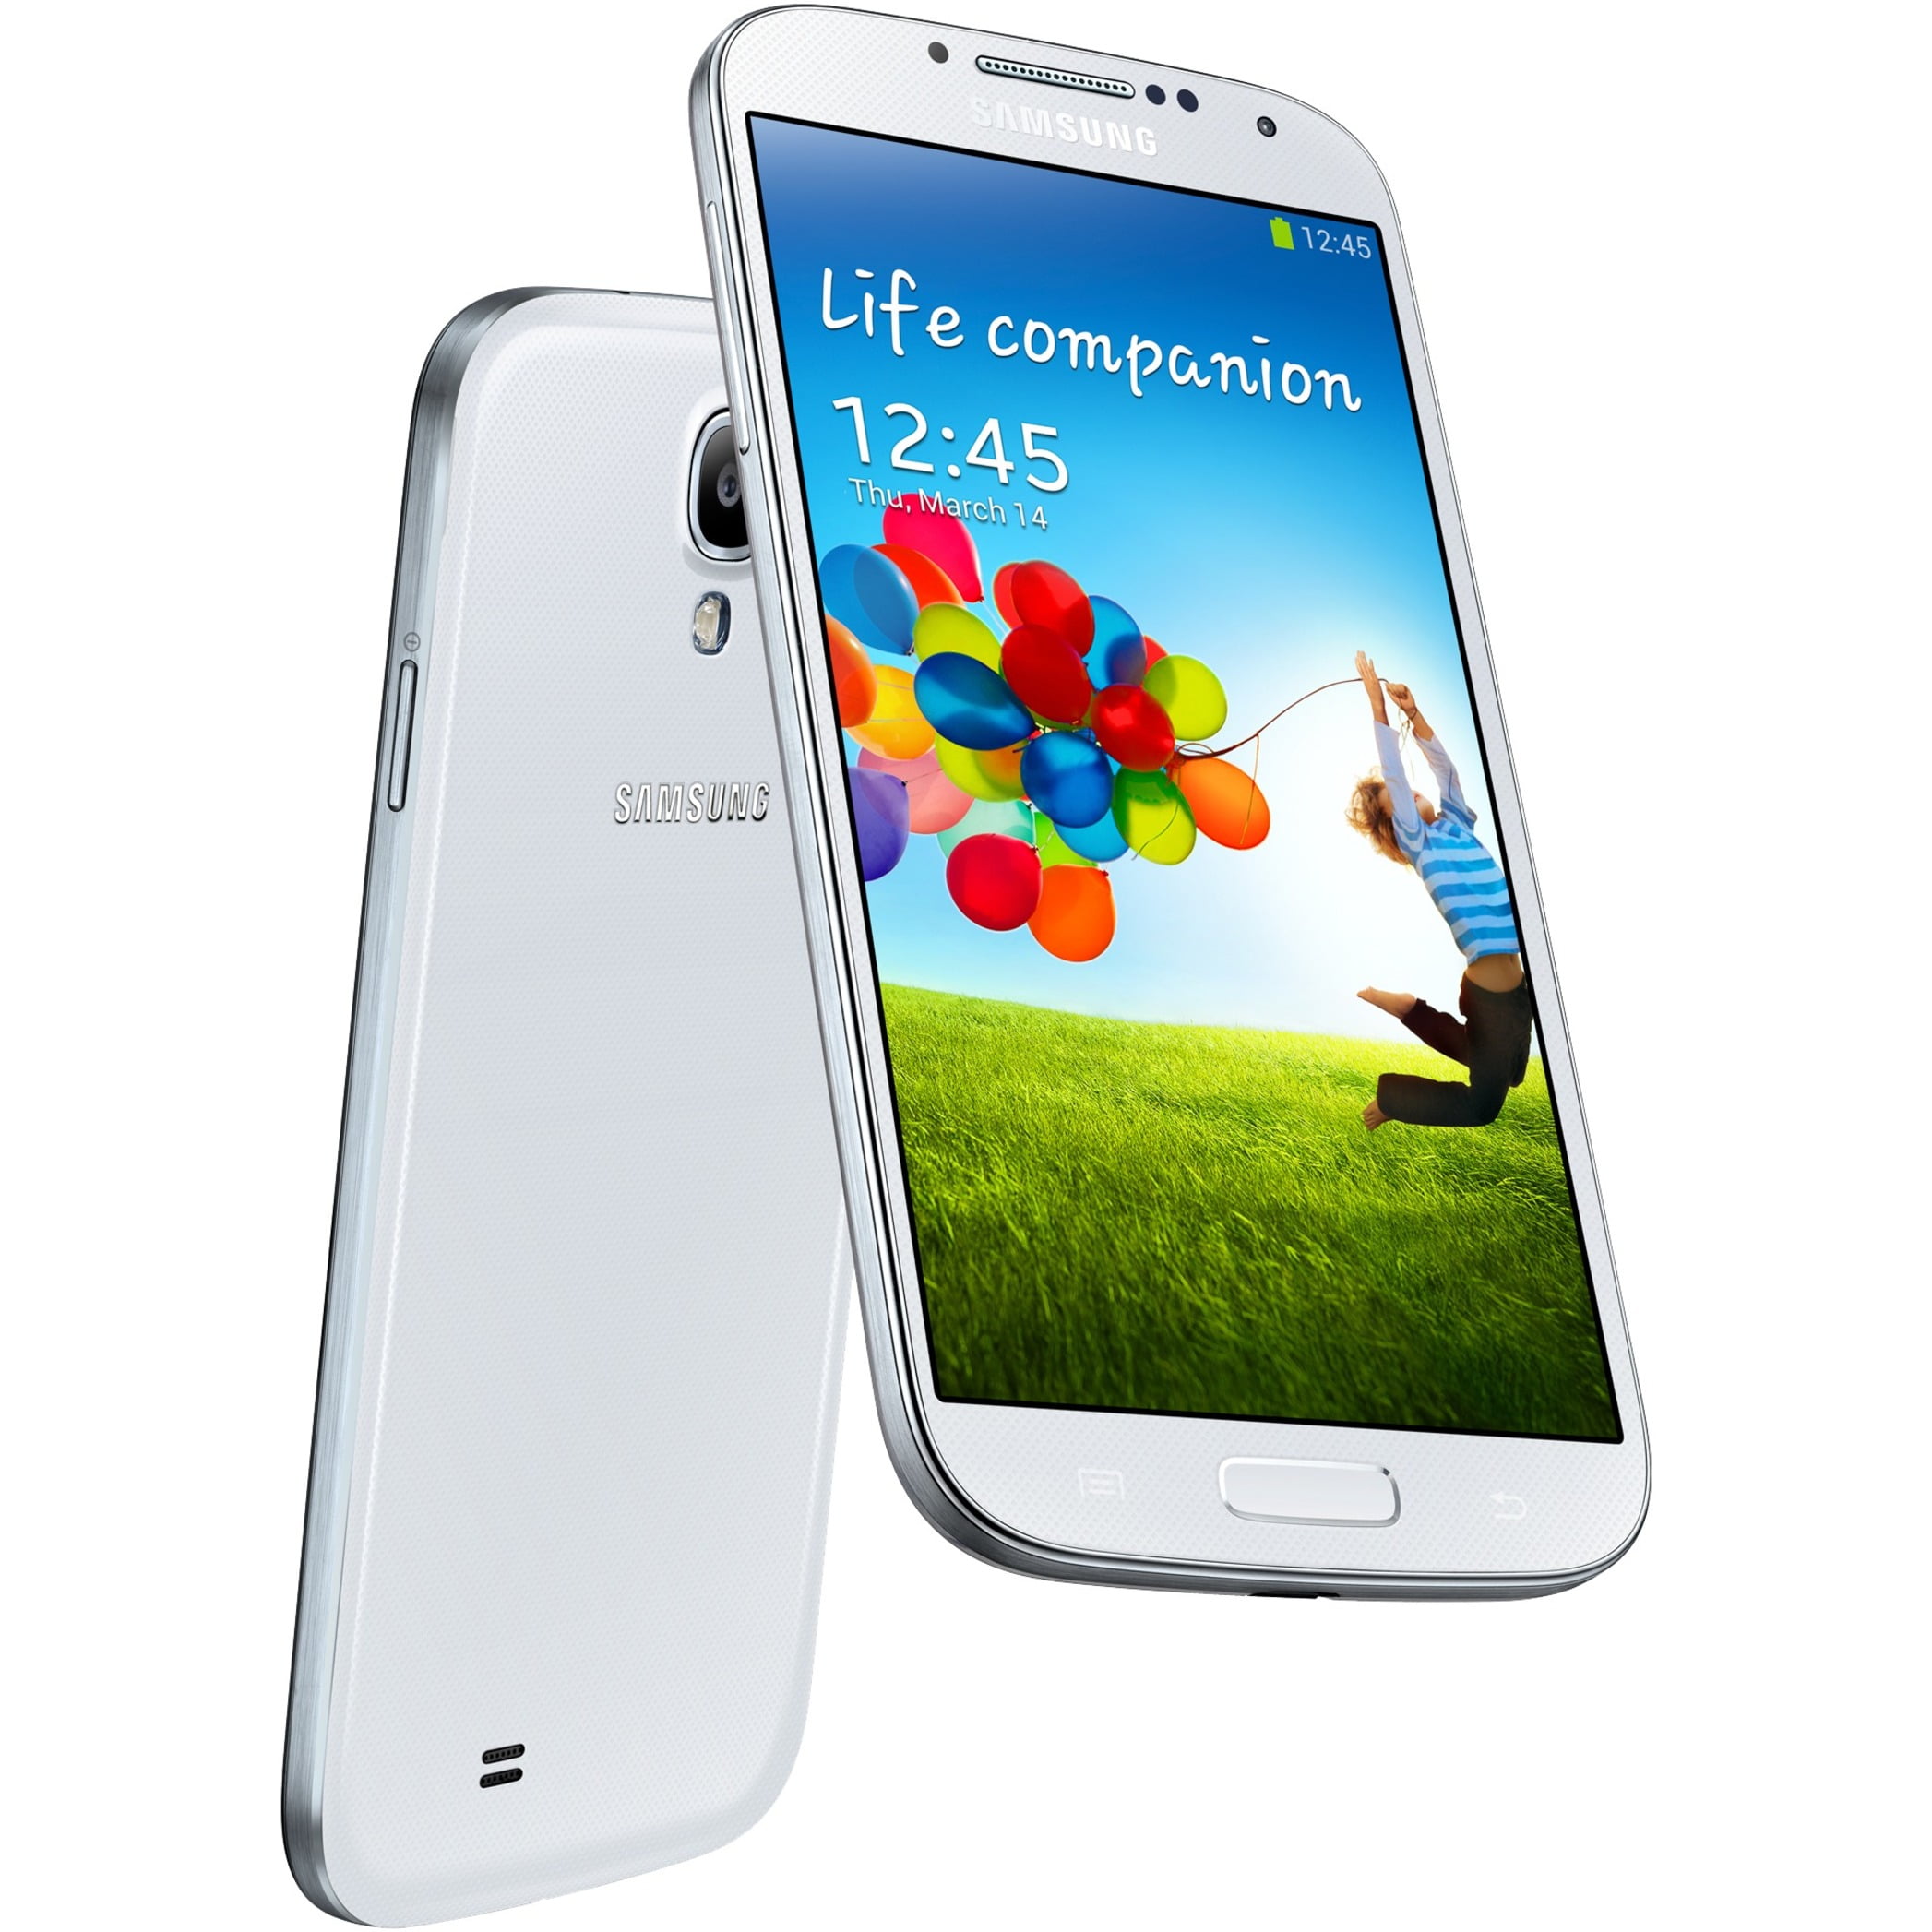 Samsung Galaxy s4 gt-i9500